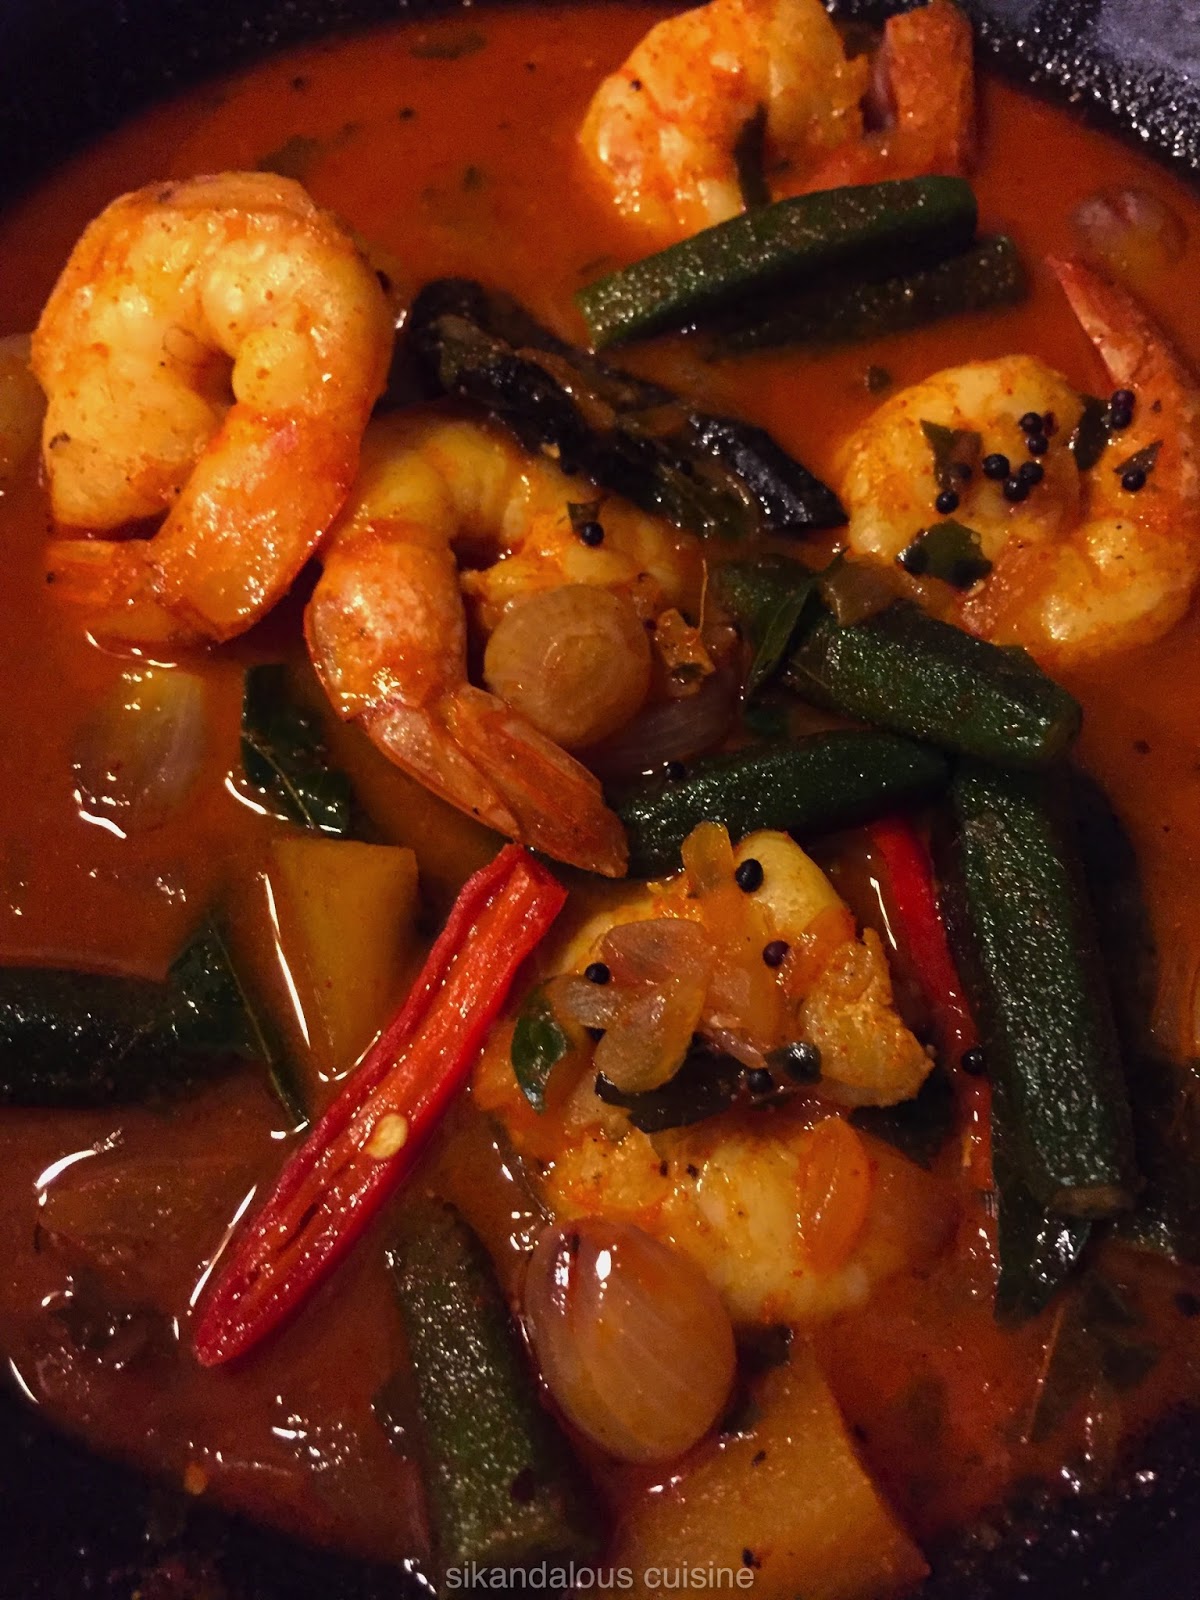 Sikandalous Cuisine: Veenu's Fish / Prawn Curry #sikandalouscuisine